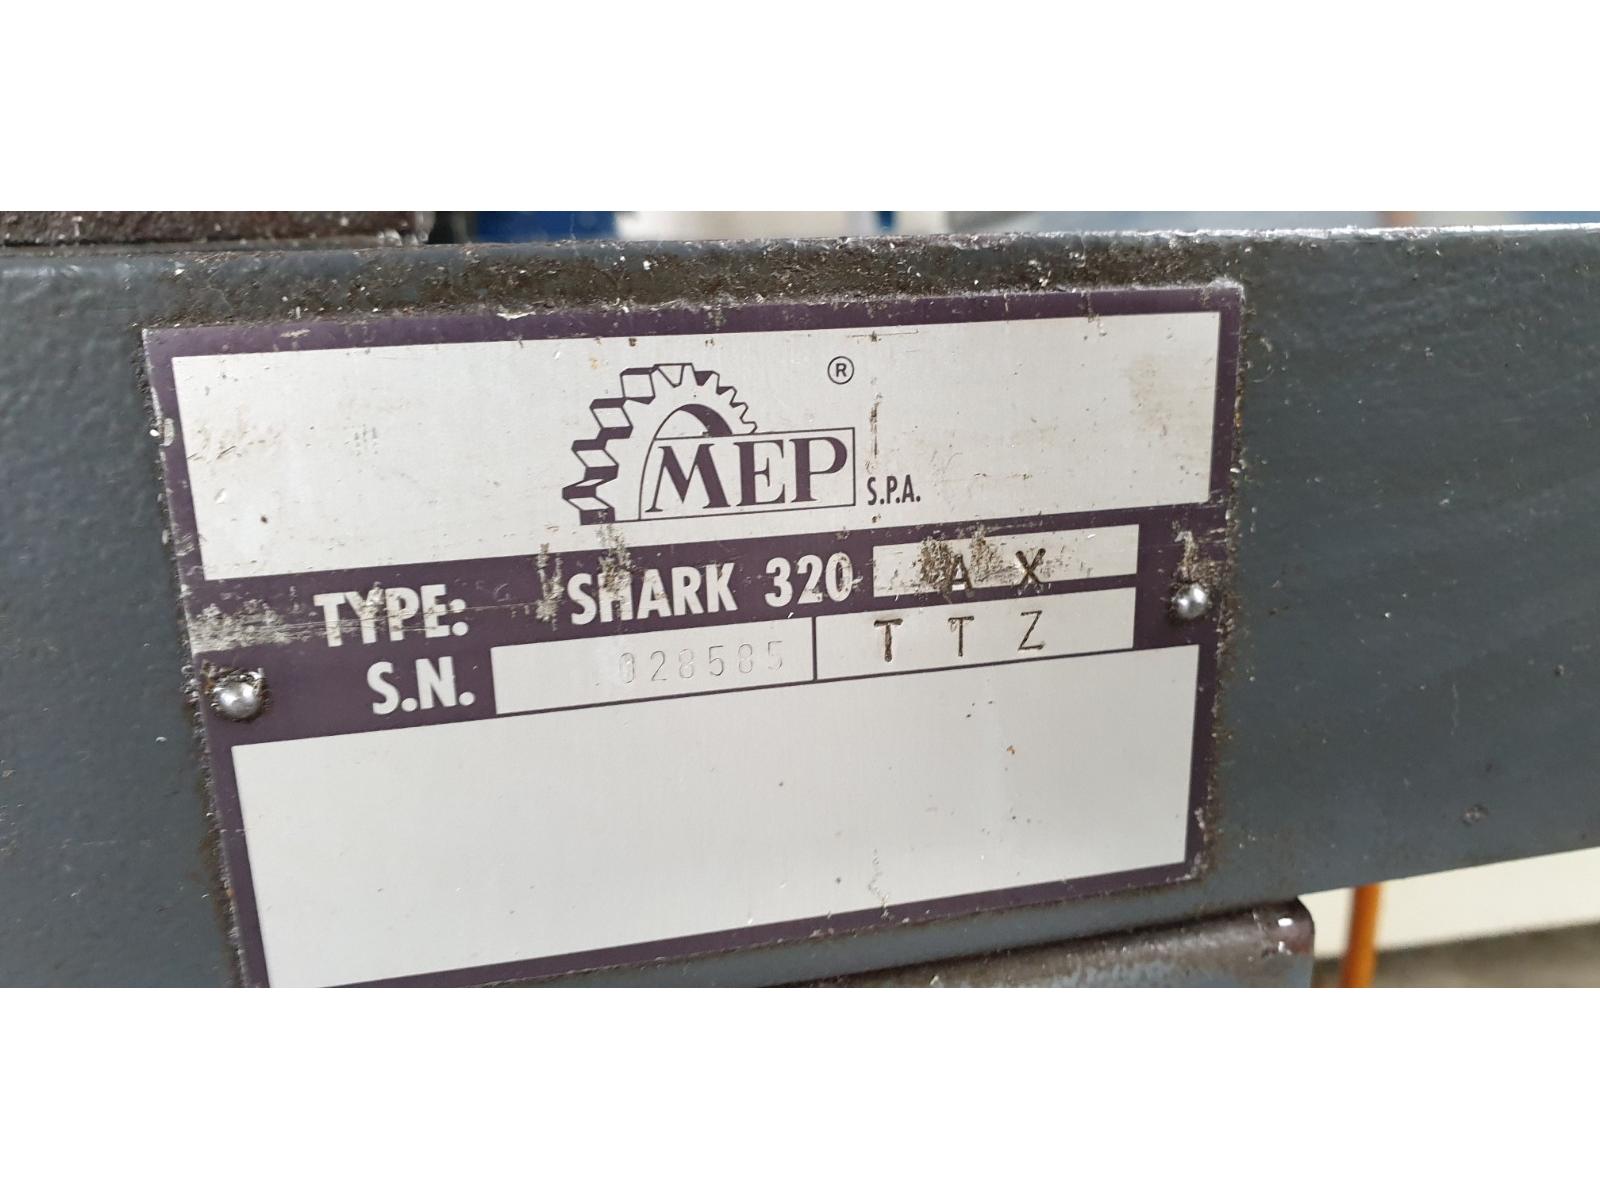 Mep shark 320 AX piła przecinarka